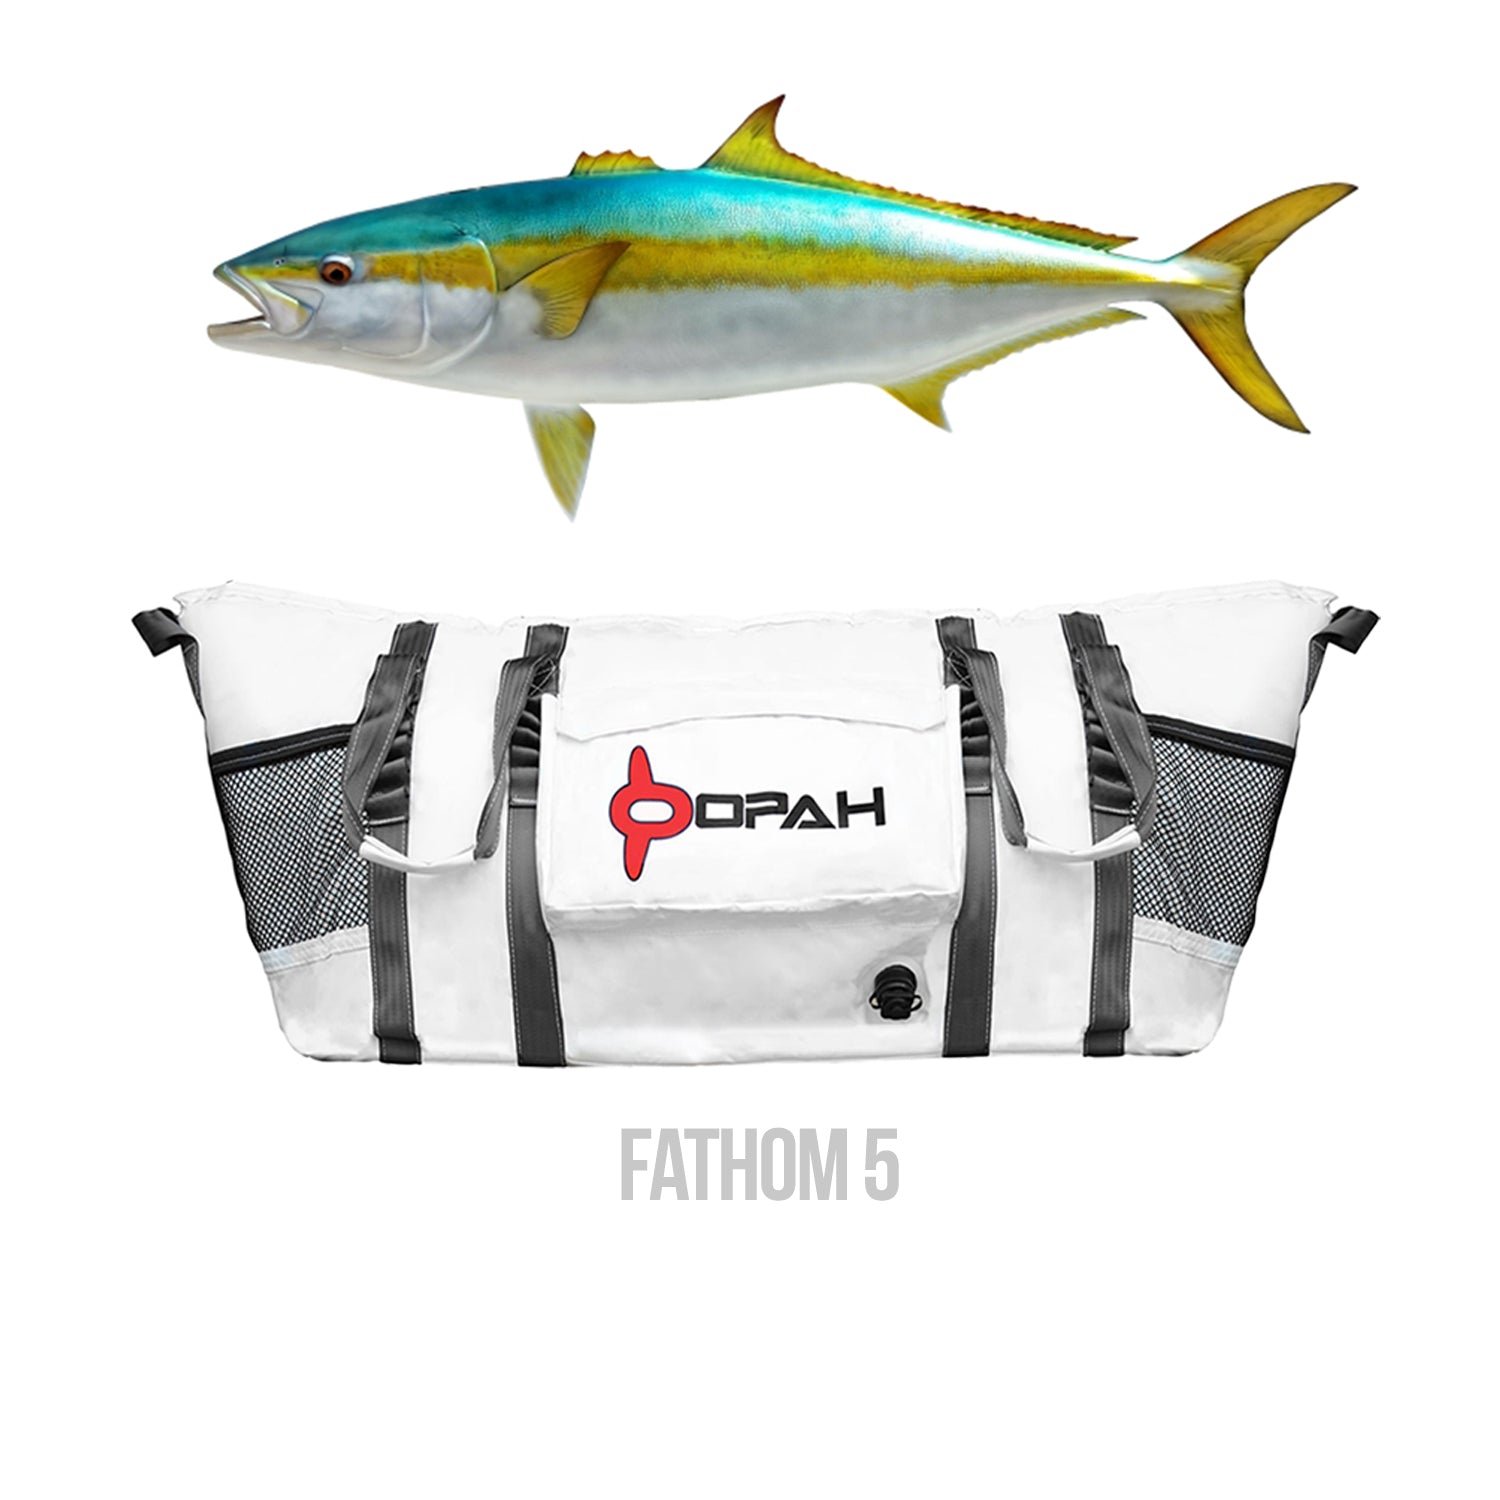  Buffalo Gear Insulated Fishing Kill Bag 40x18In,Leakproof Fish  Cooler Bag